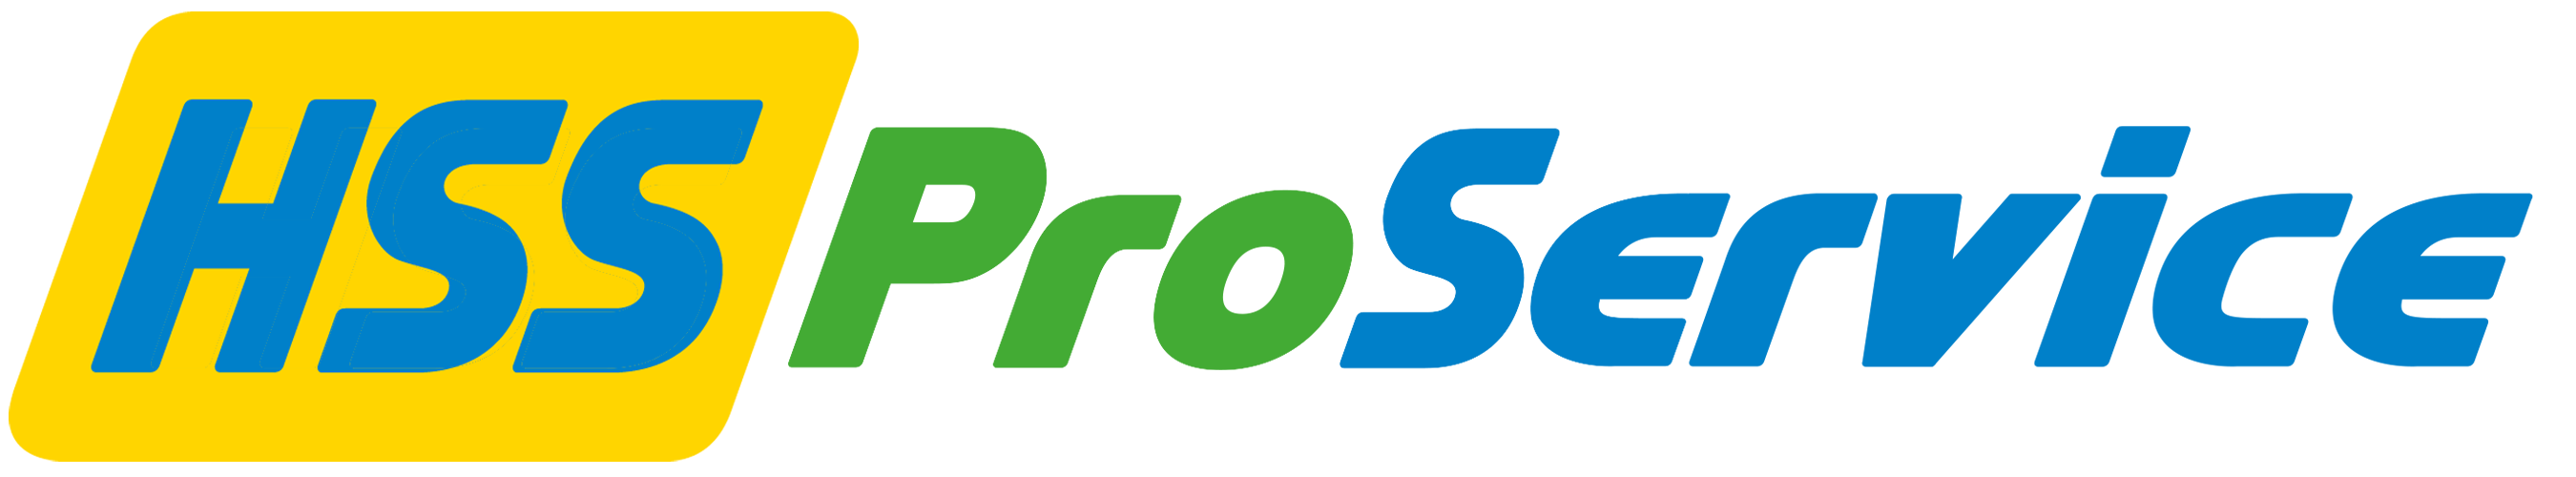 HSS_pro_logo